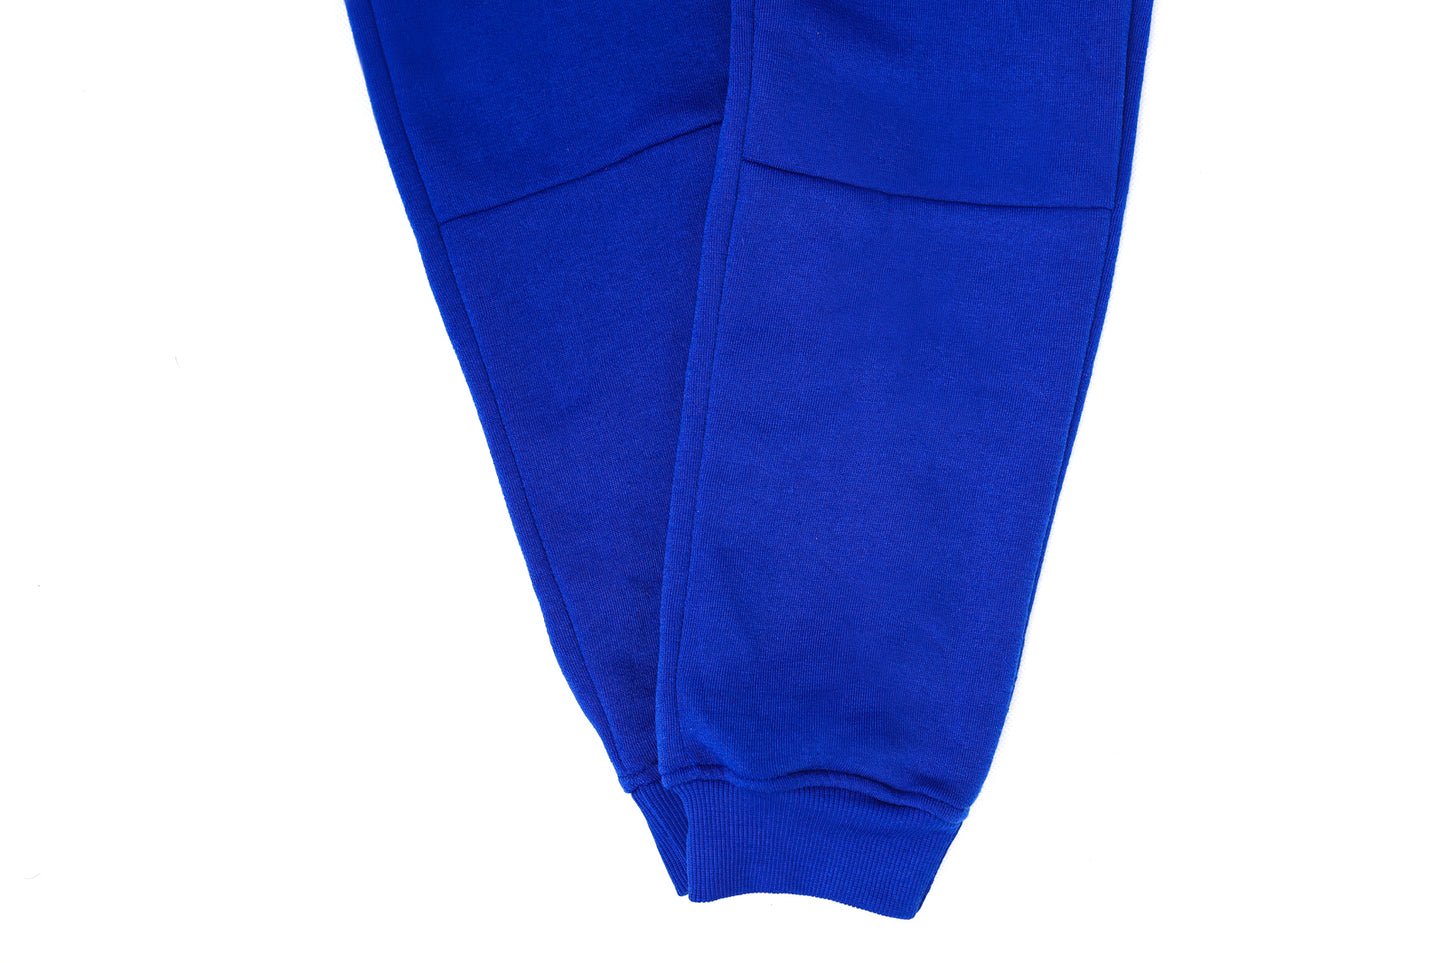 Mens Skinny Track Pants Joggers Trousers Gym Casual Sweat Cuffed Slim Trackies Fleece - Royal Blue - XL